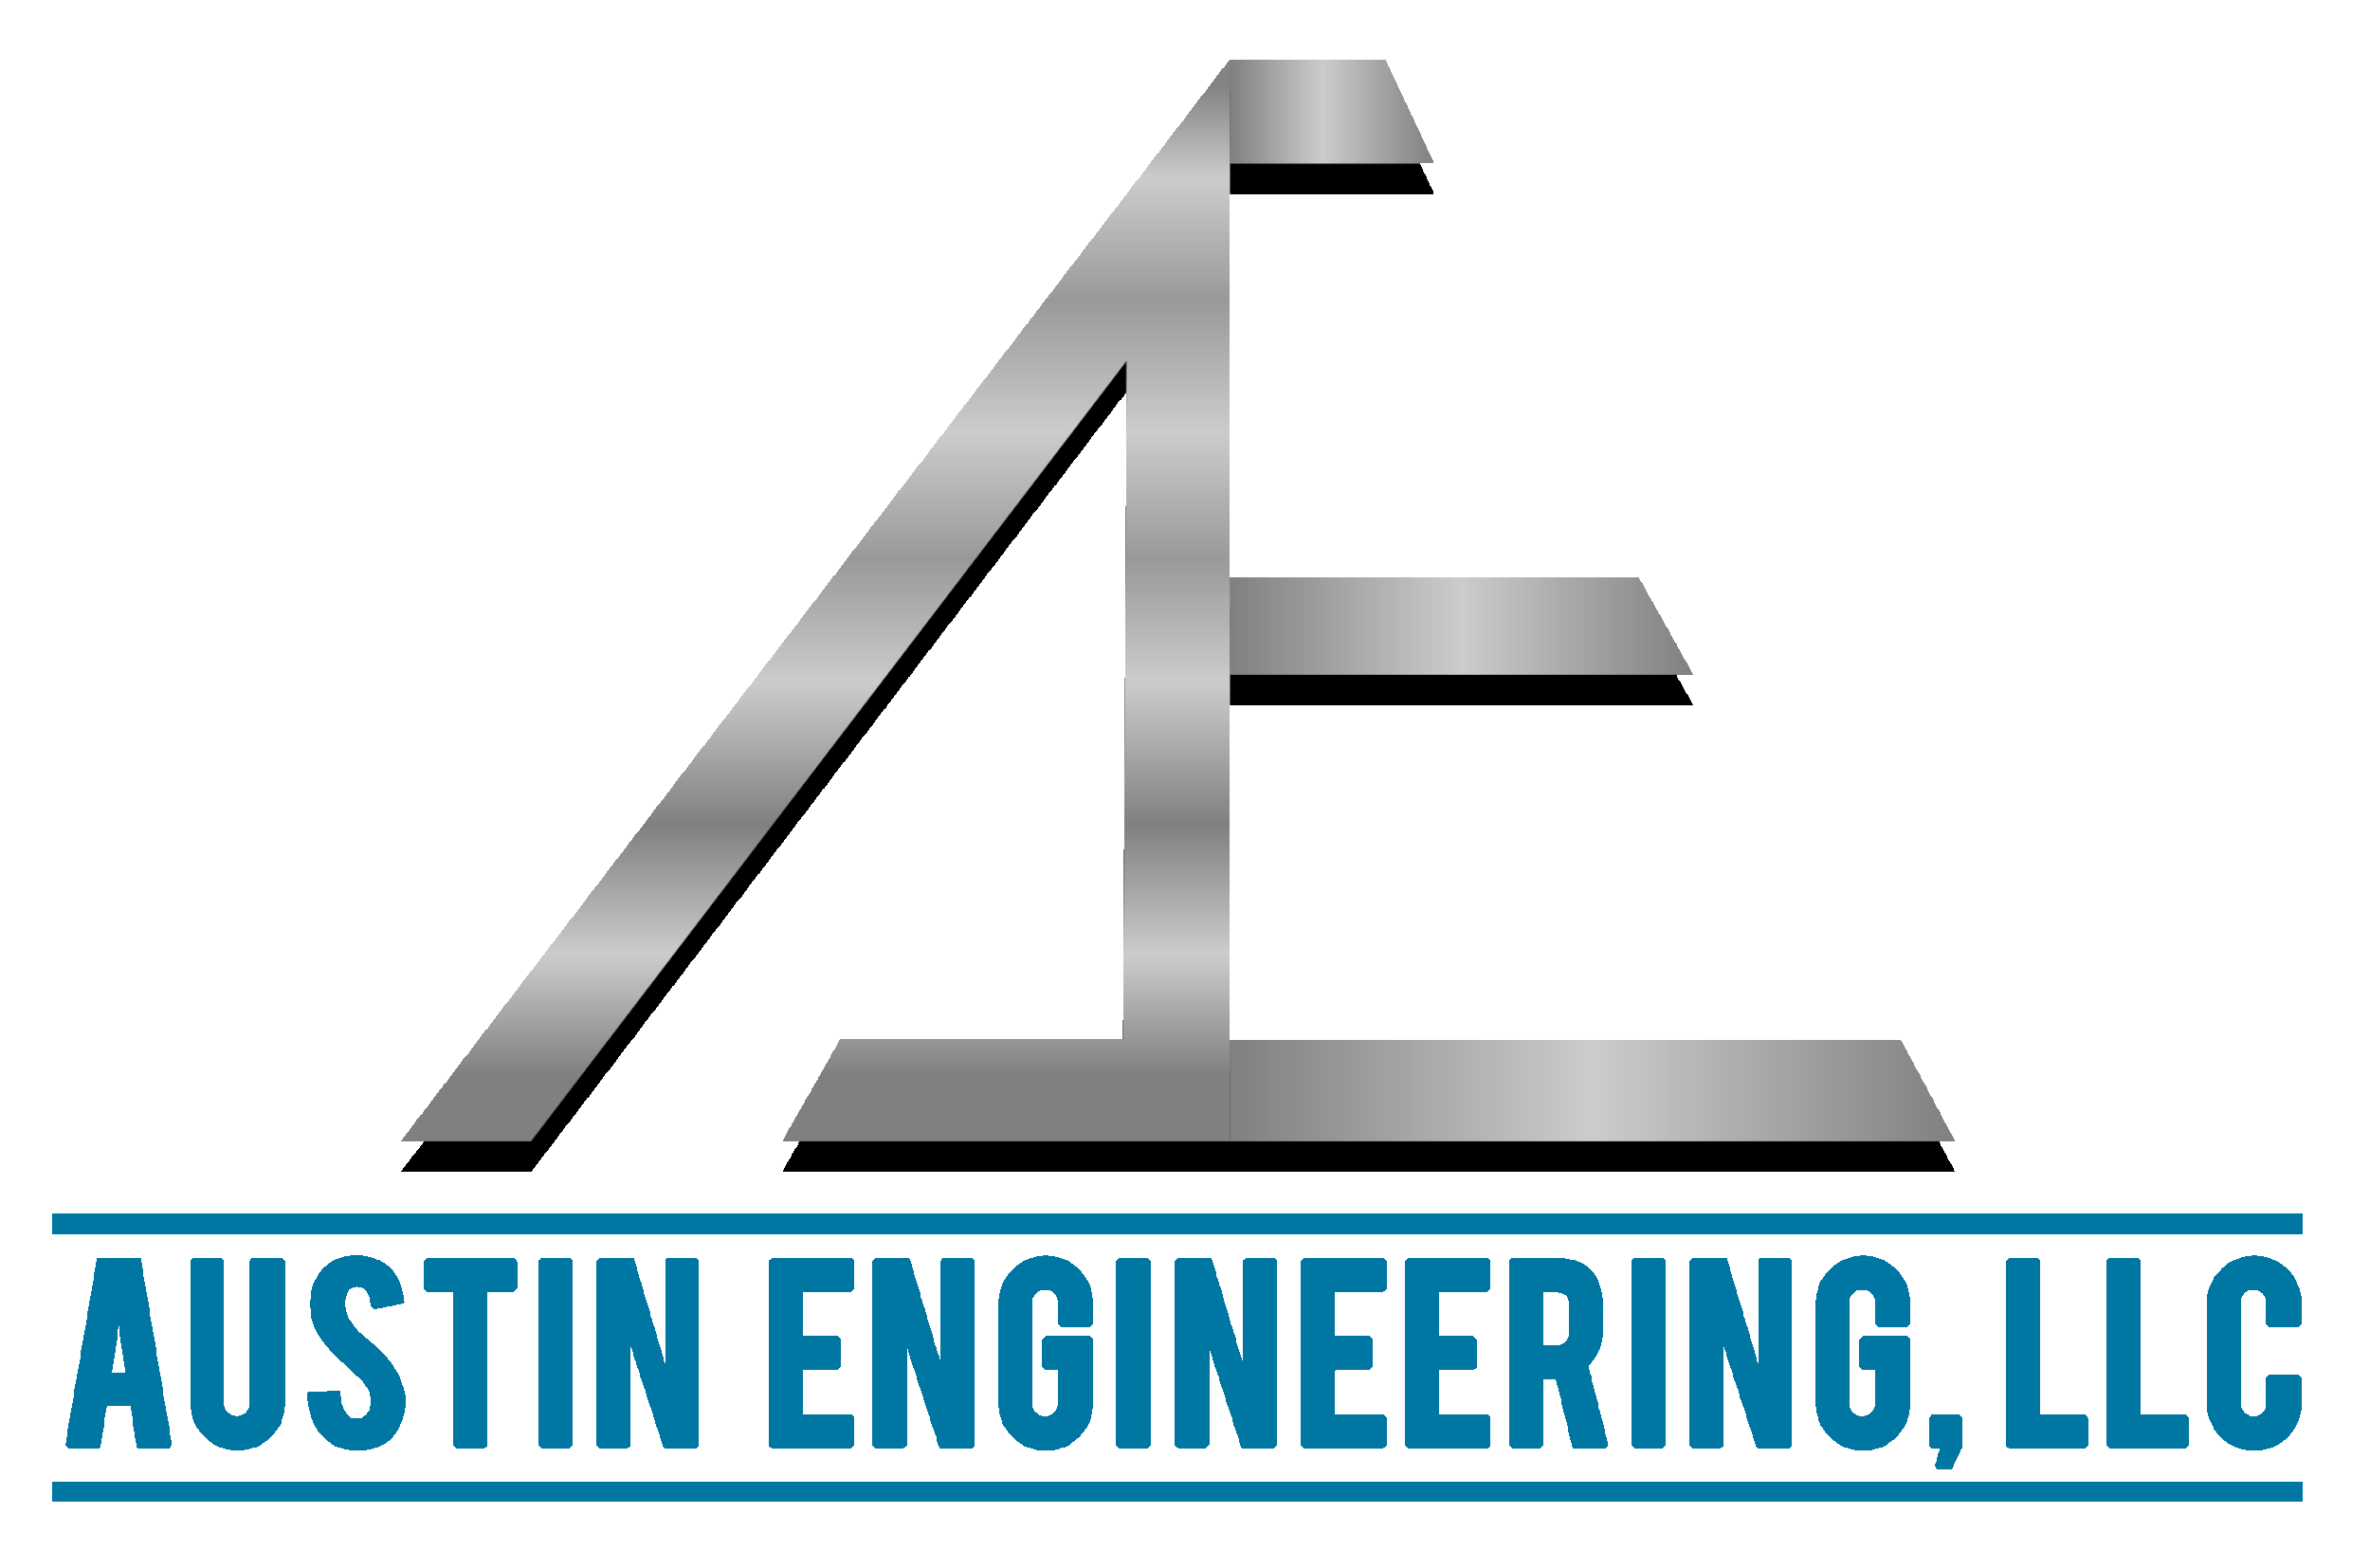 Austin Engineering, LLC